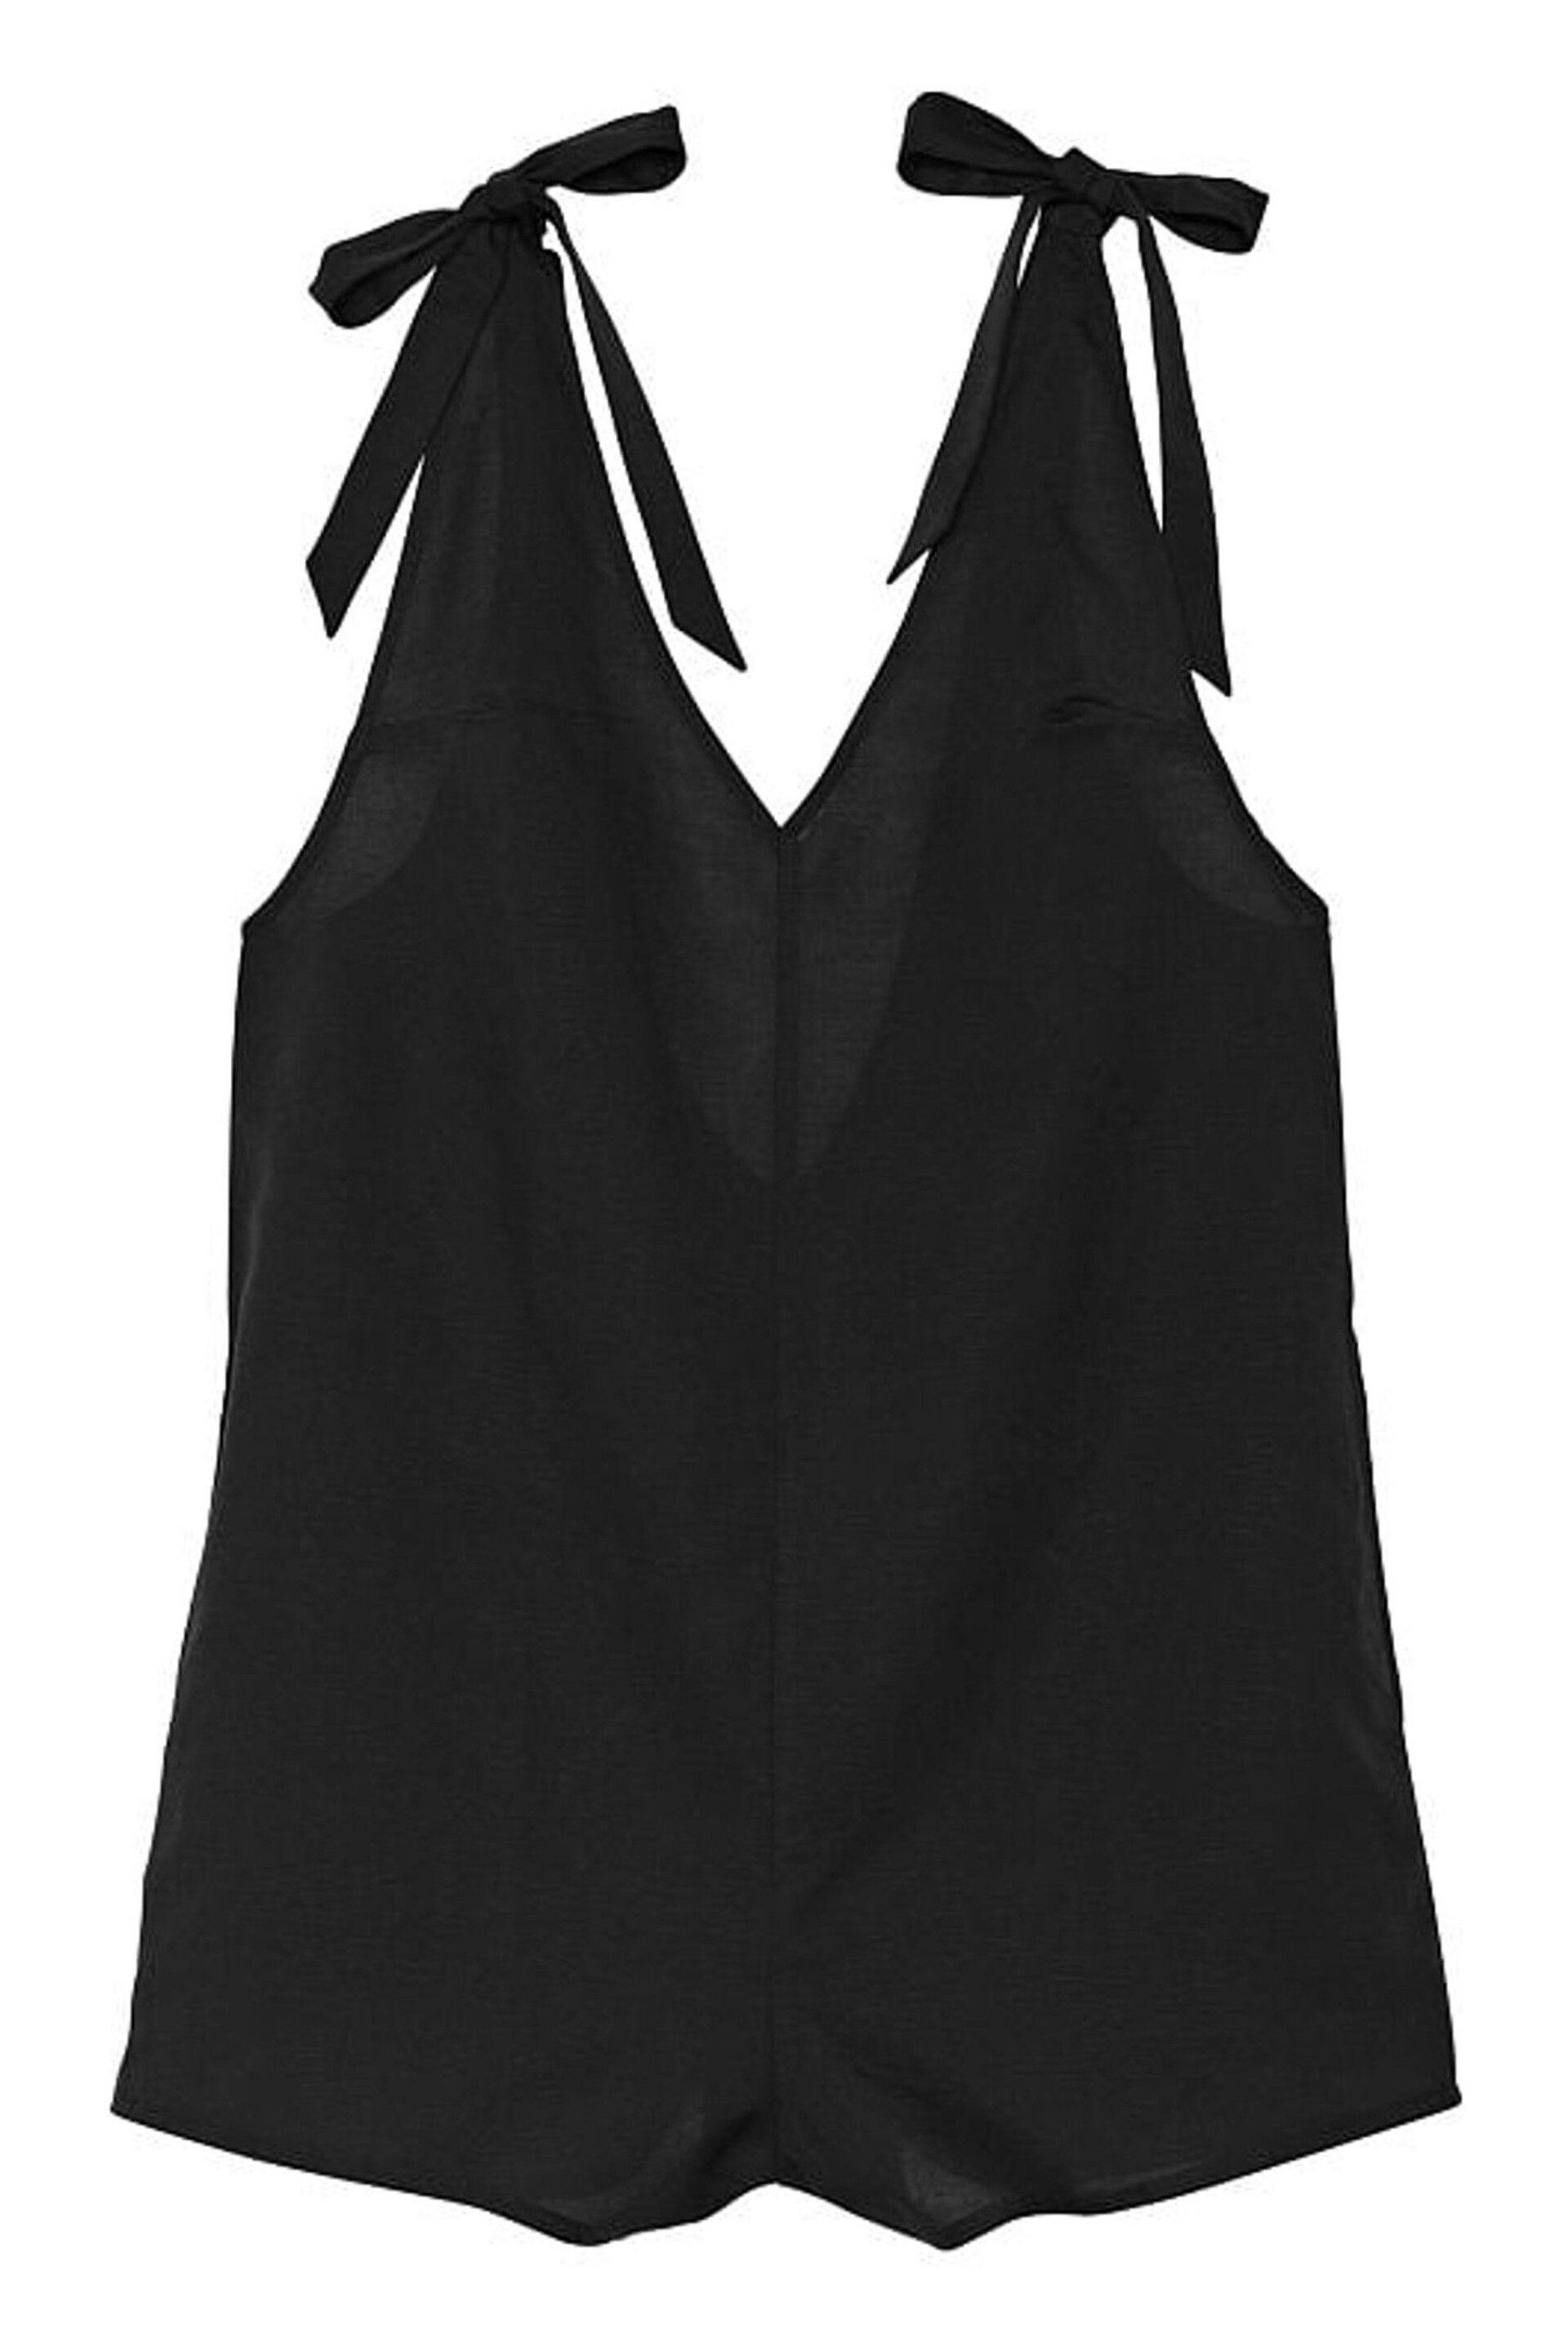 Victoria's Secret Black Linen Playsuit Cover Up - Image 3 of 3